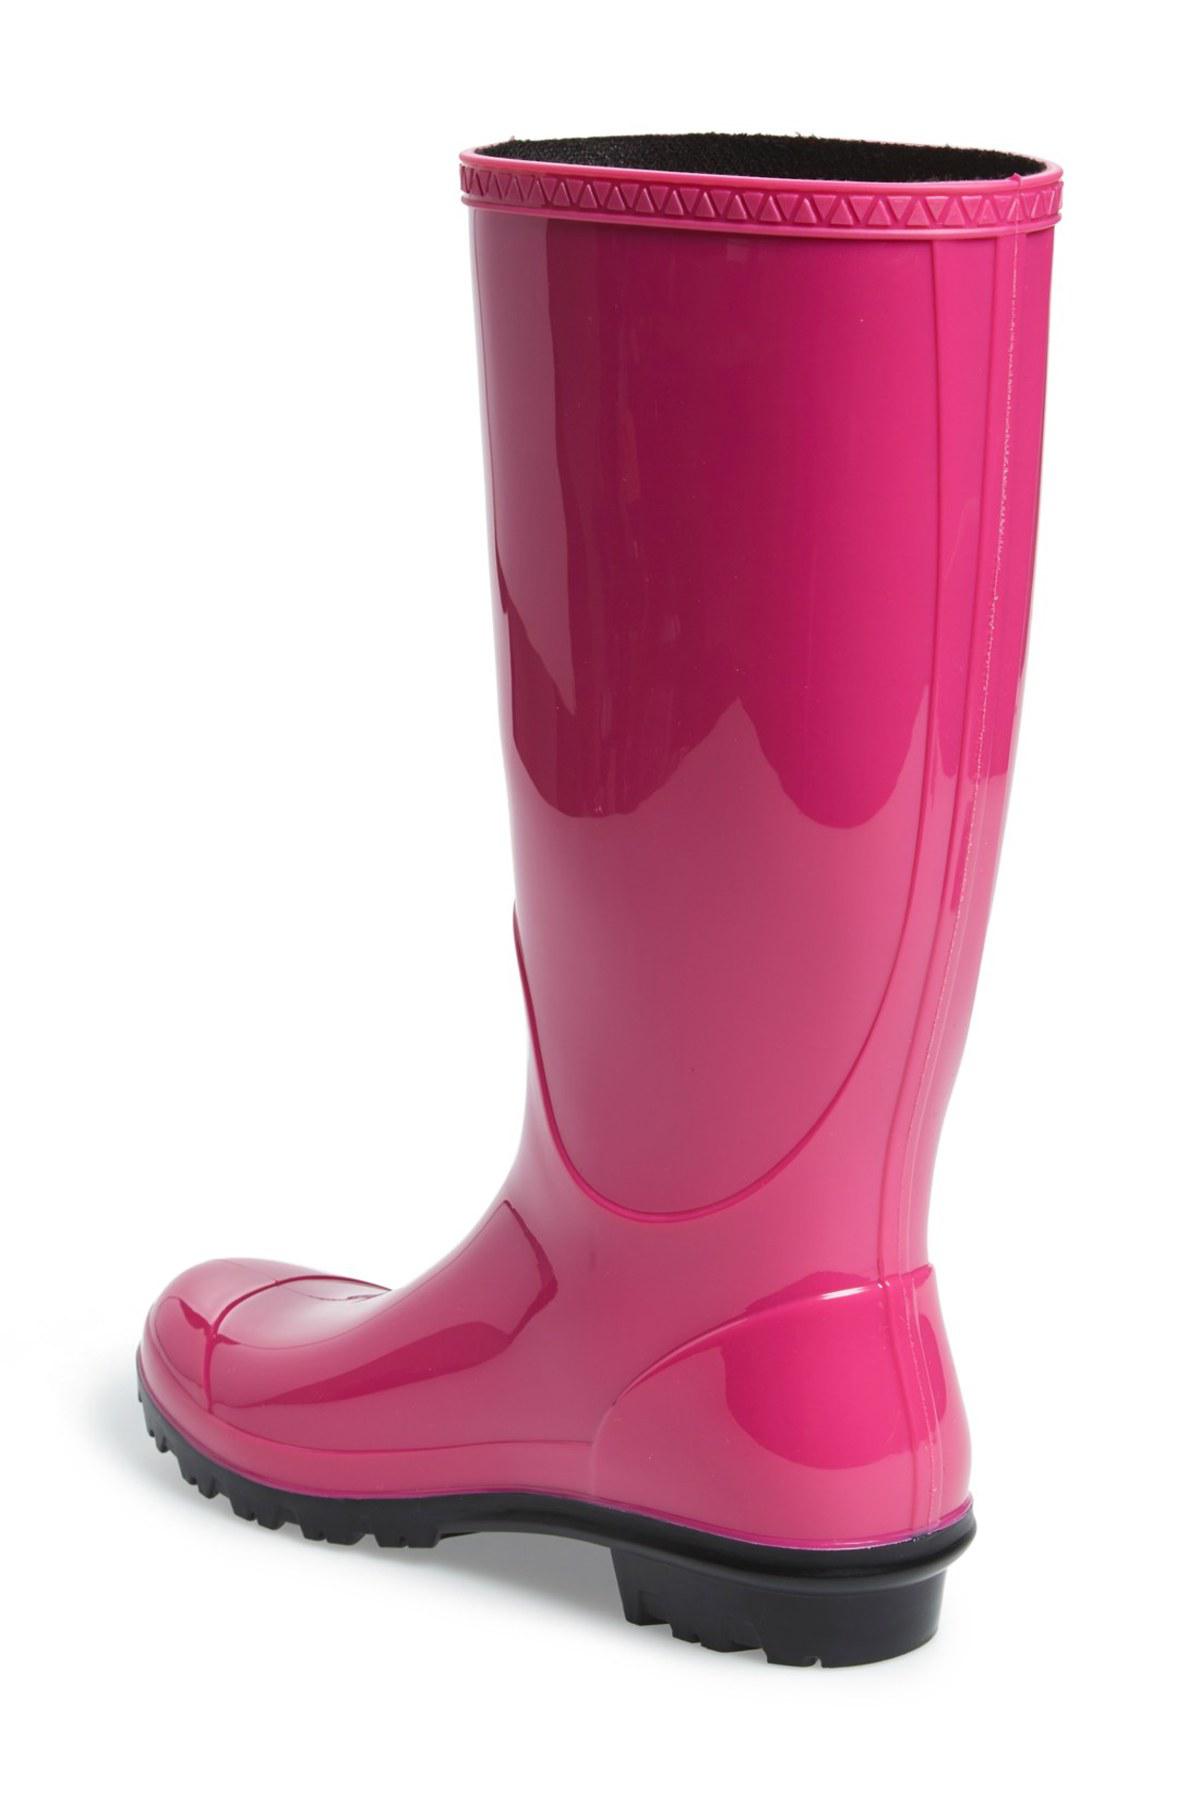 UGG Shaye Waterproof Rain Boot in Pink - Lyst